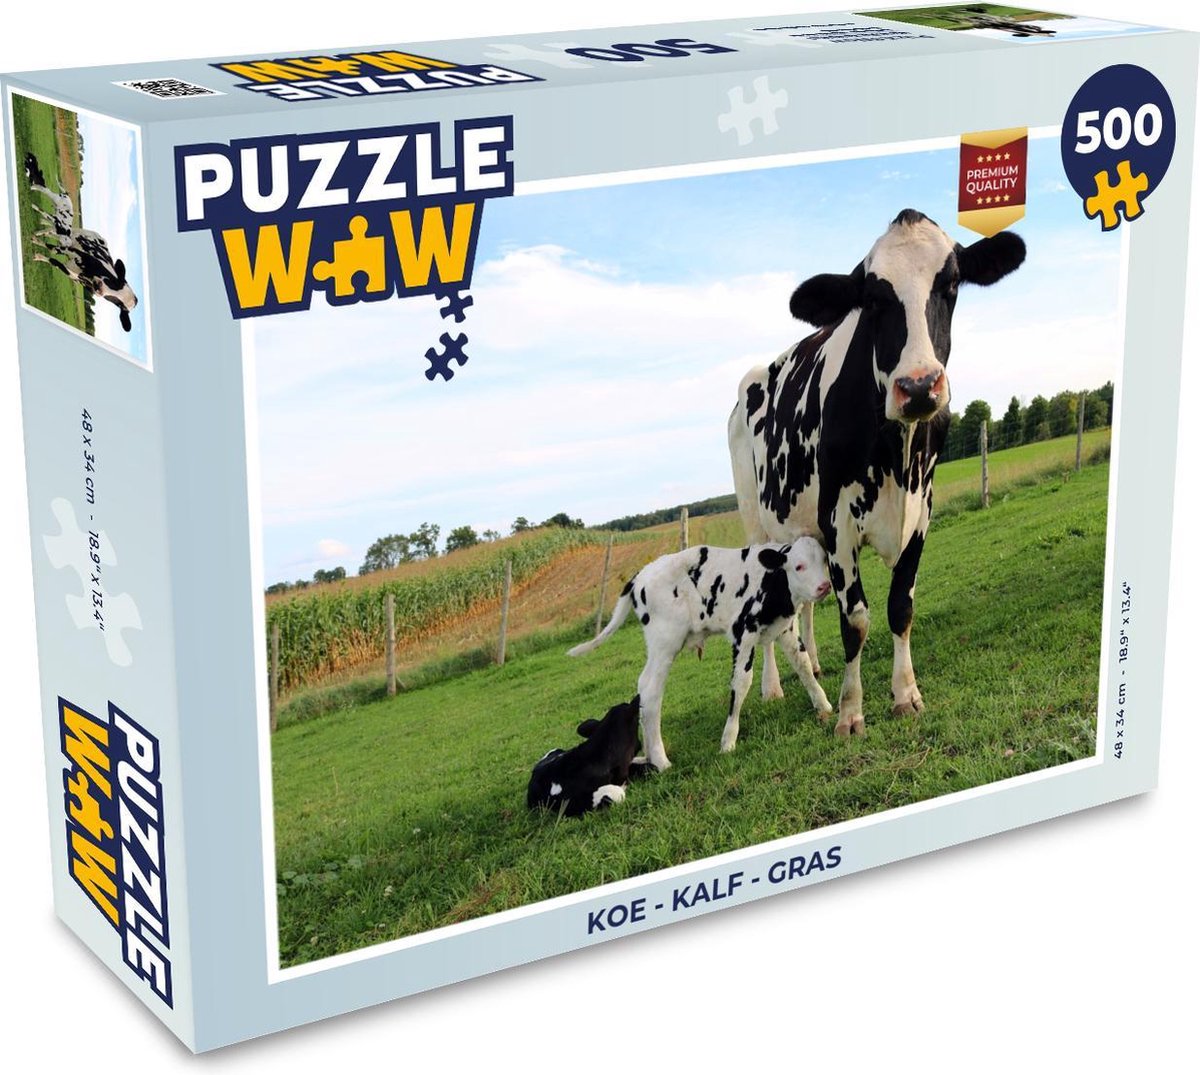 Afbeelding van product PuzzleWow  Puzzel Koe - Kalf - Dieren - Gras - Legpuzzel - Puzzel 500 stukjes